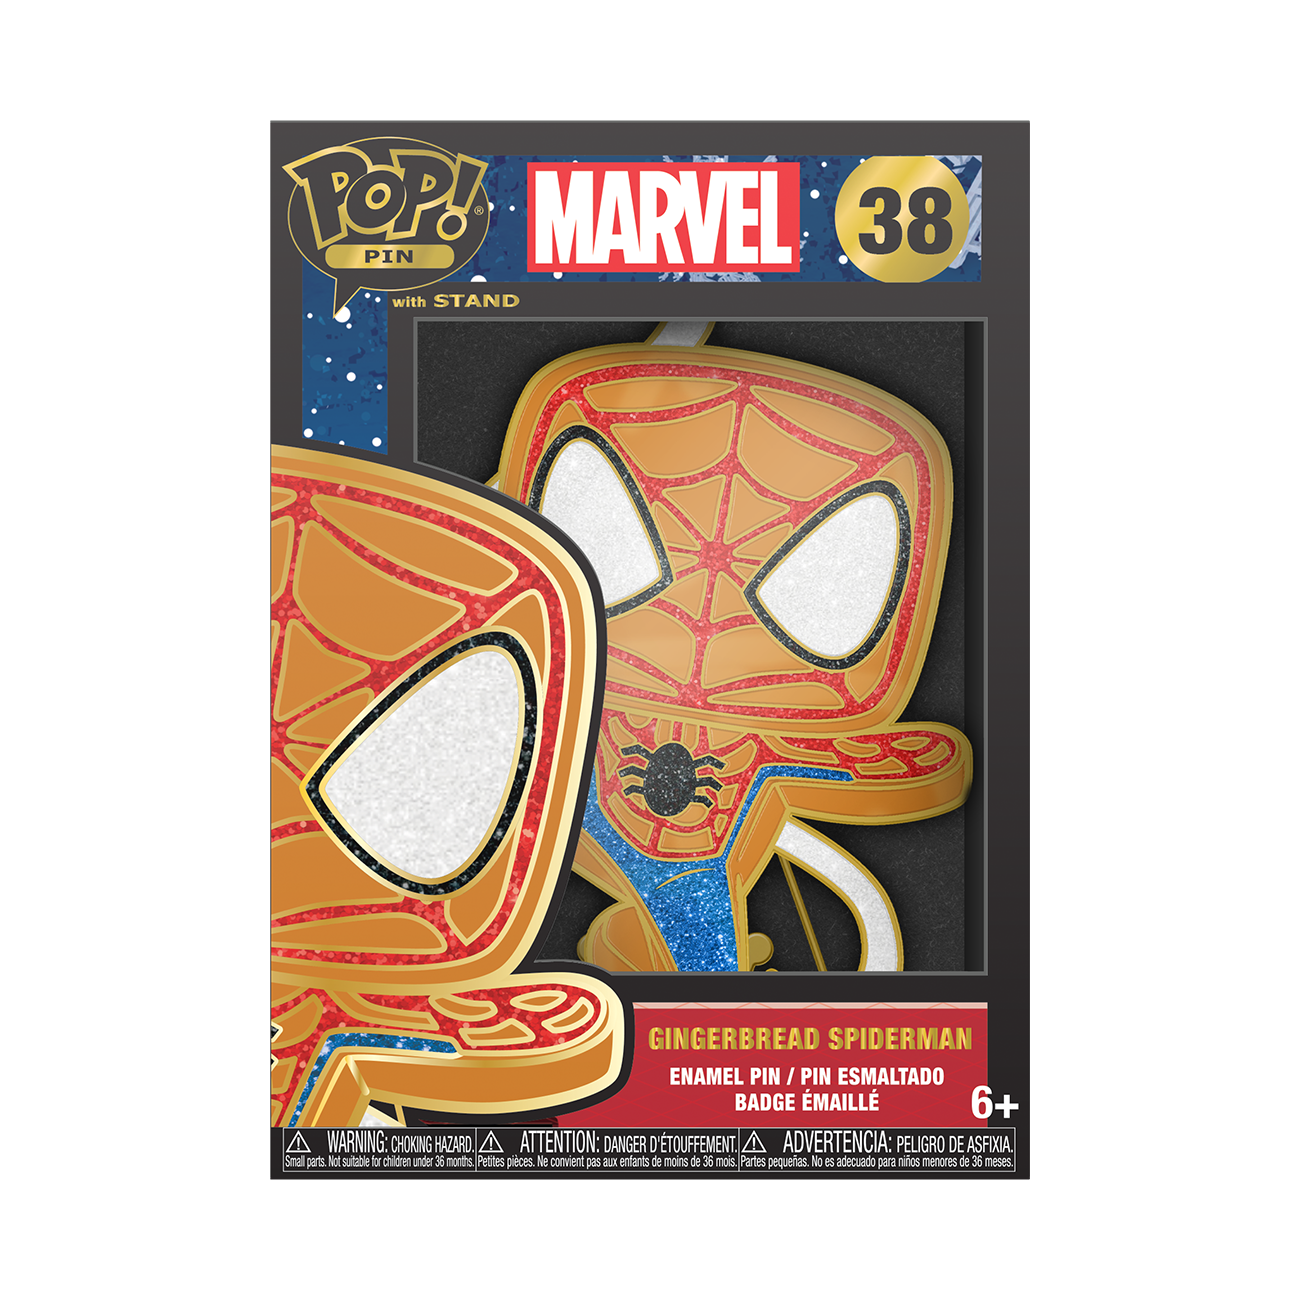 FUNKO POP! PIN Gingerbread Spider-Man Pop! Pin - Marvel